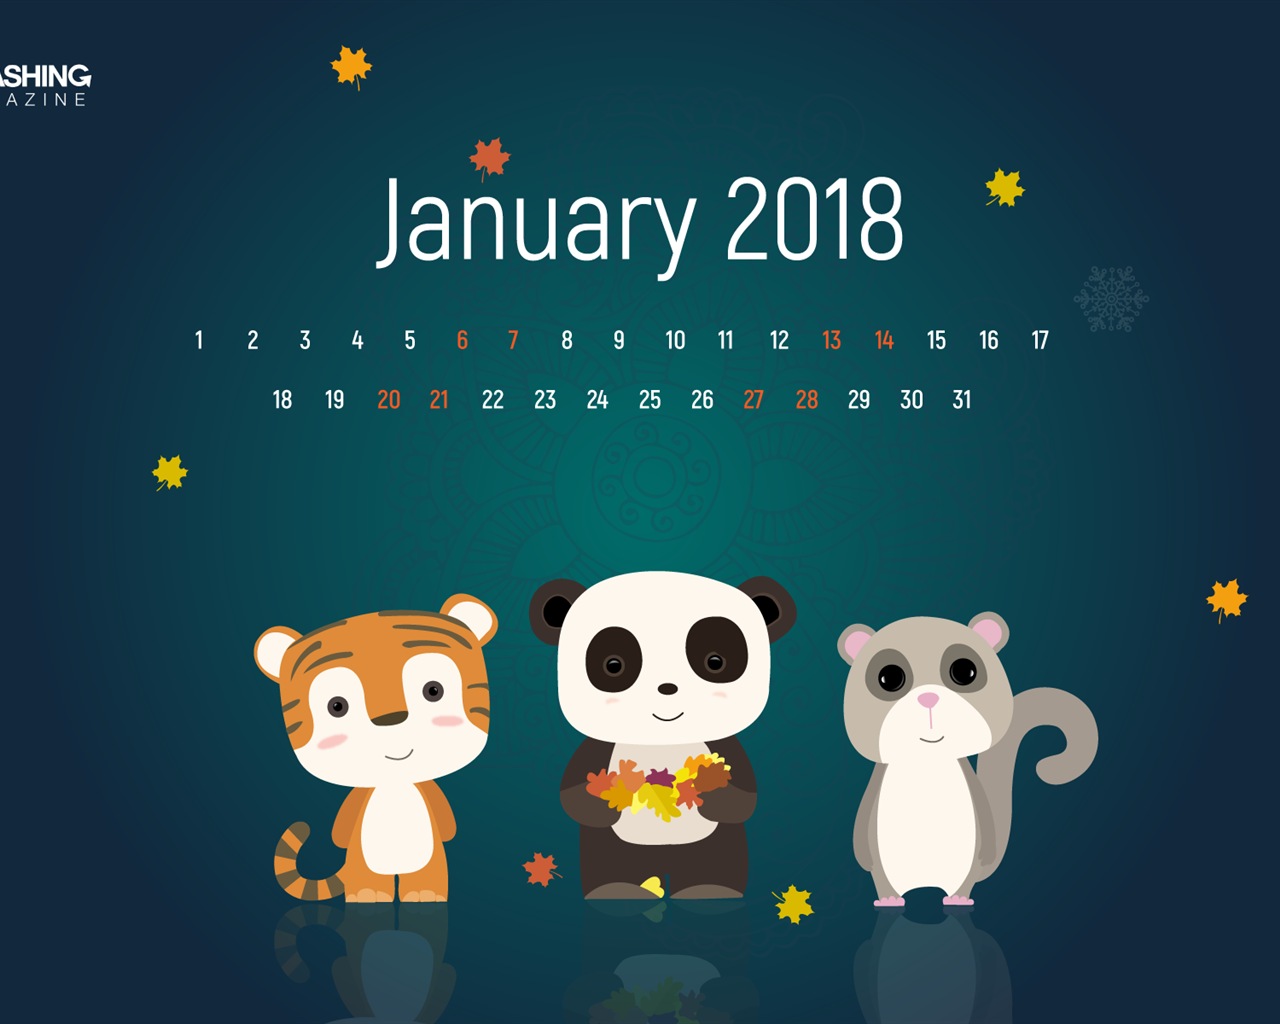 January 2018 Calendar Wallpaper #11 - 1280x1024